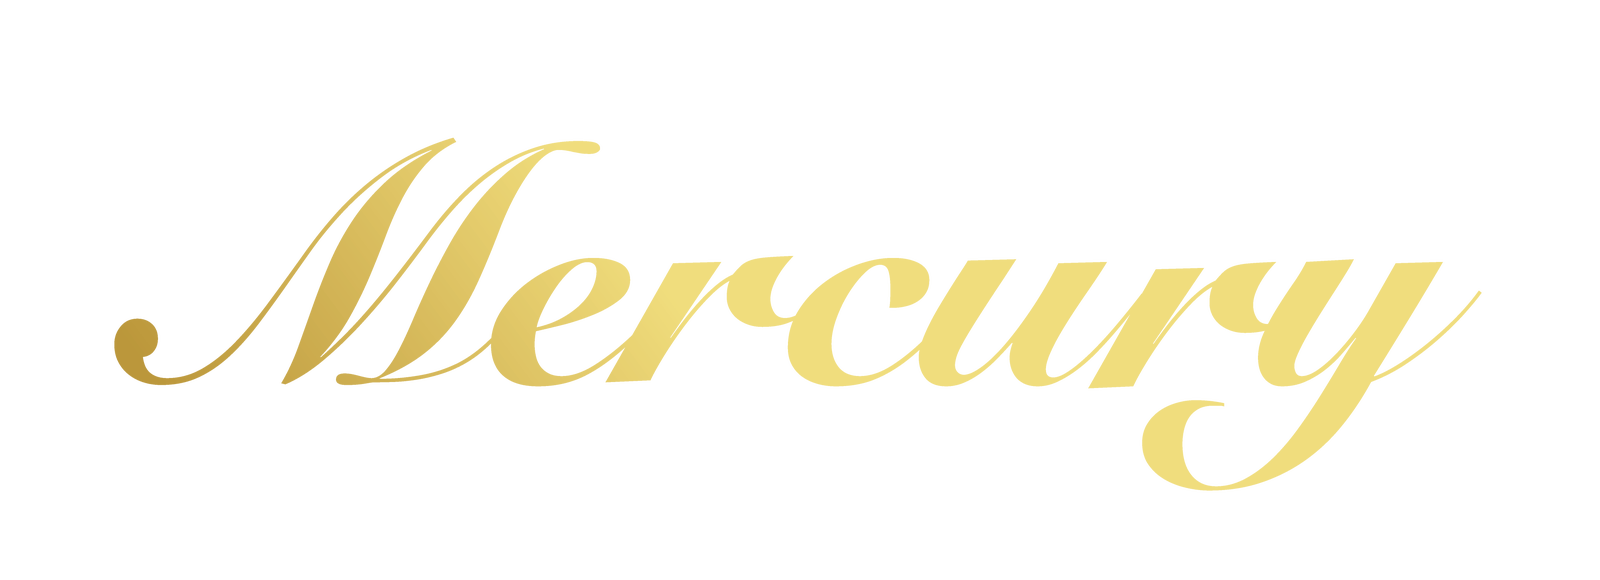 Mercury_logo_gold_CMYK-[Converted].png